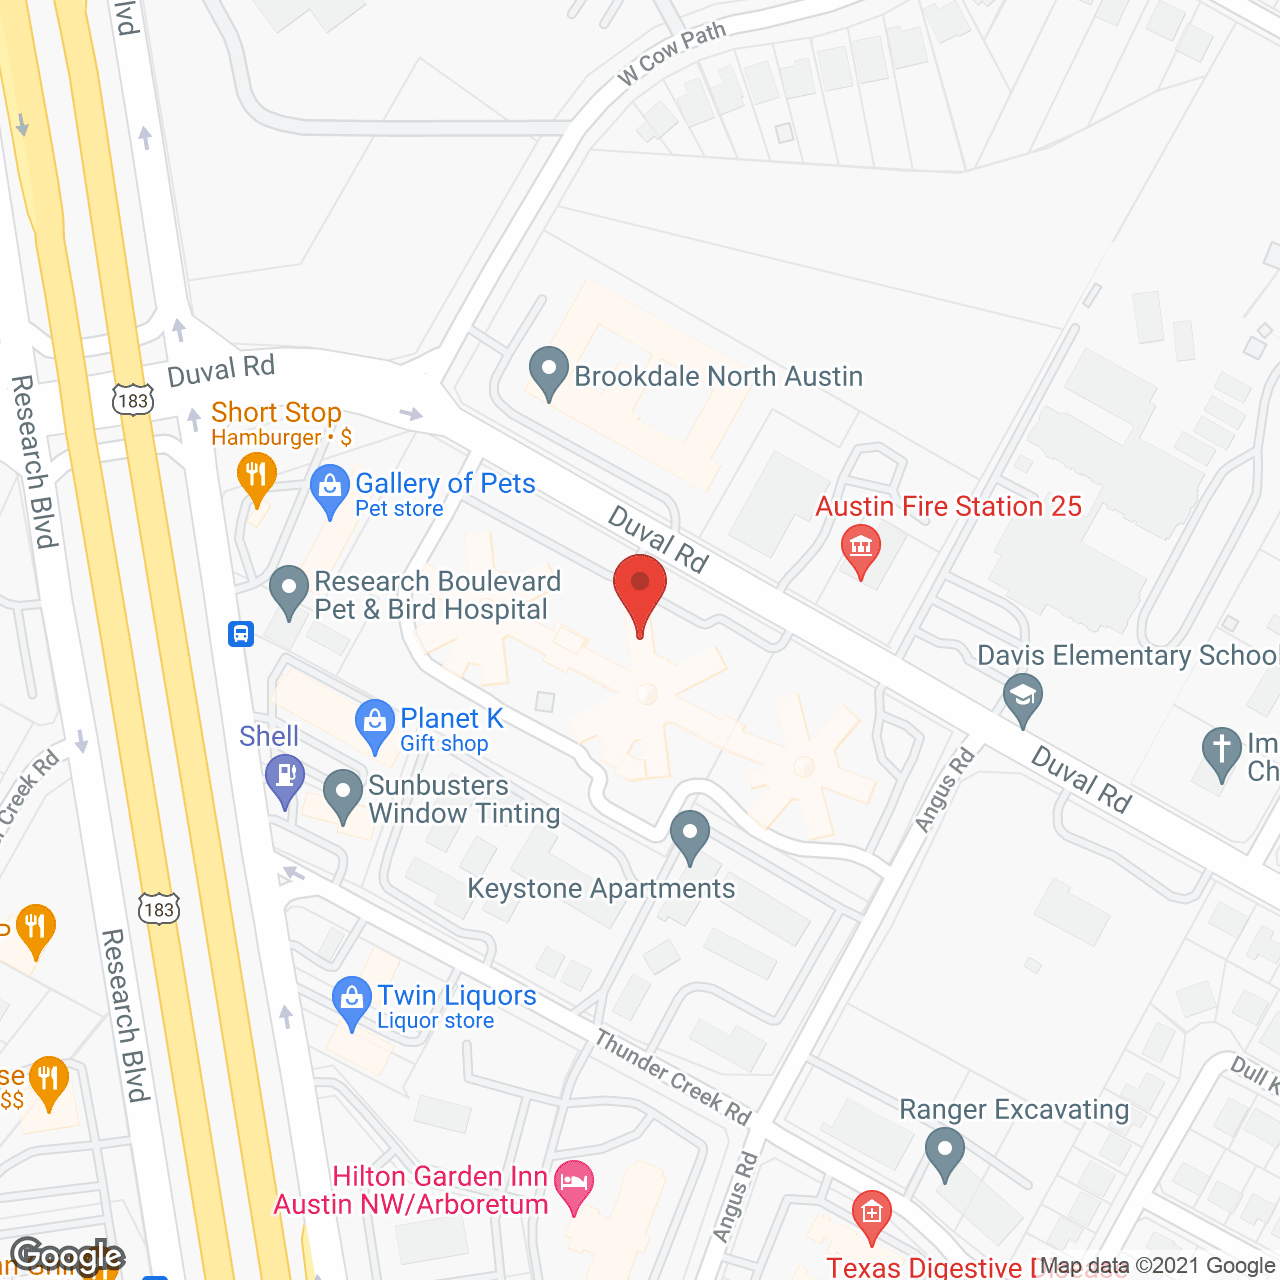 HERITAGE DUVAL GARDENS in google map